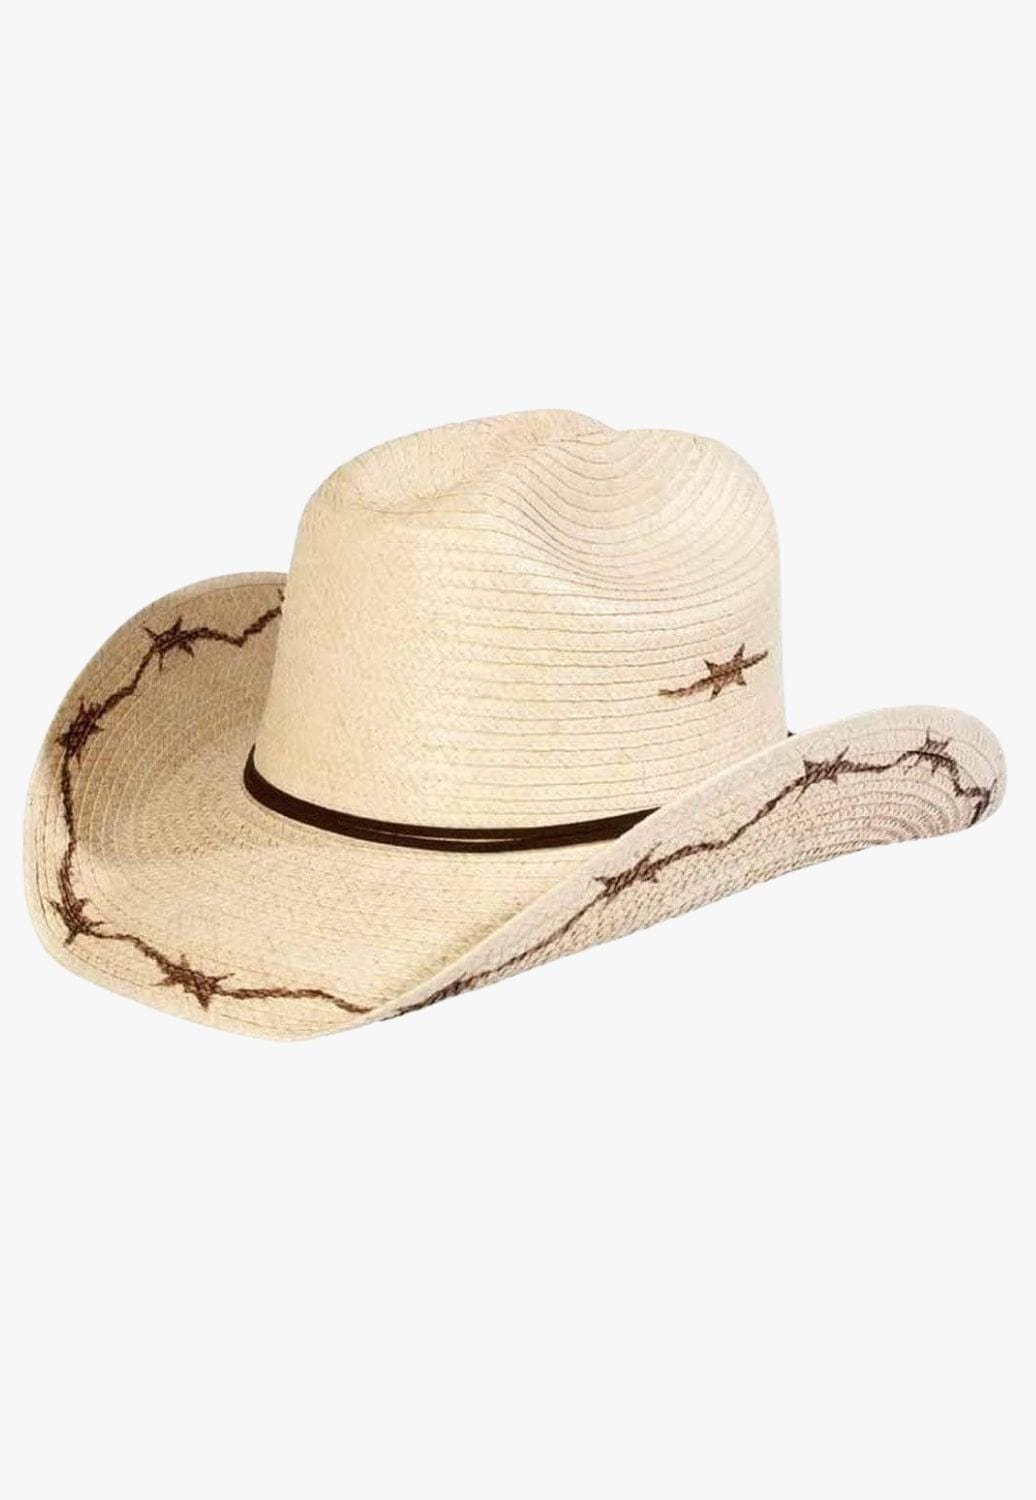 Sunbody HATS - Straw OSFA / Palm Leaf Sunbody Kids Barbed Wire Hat